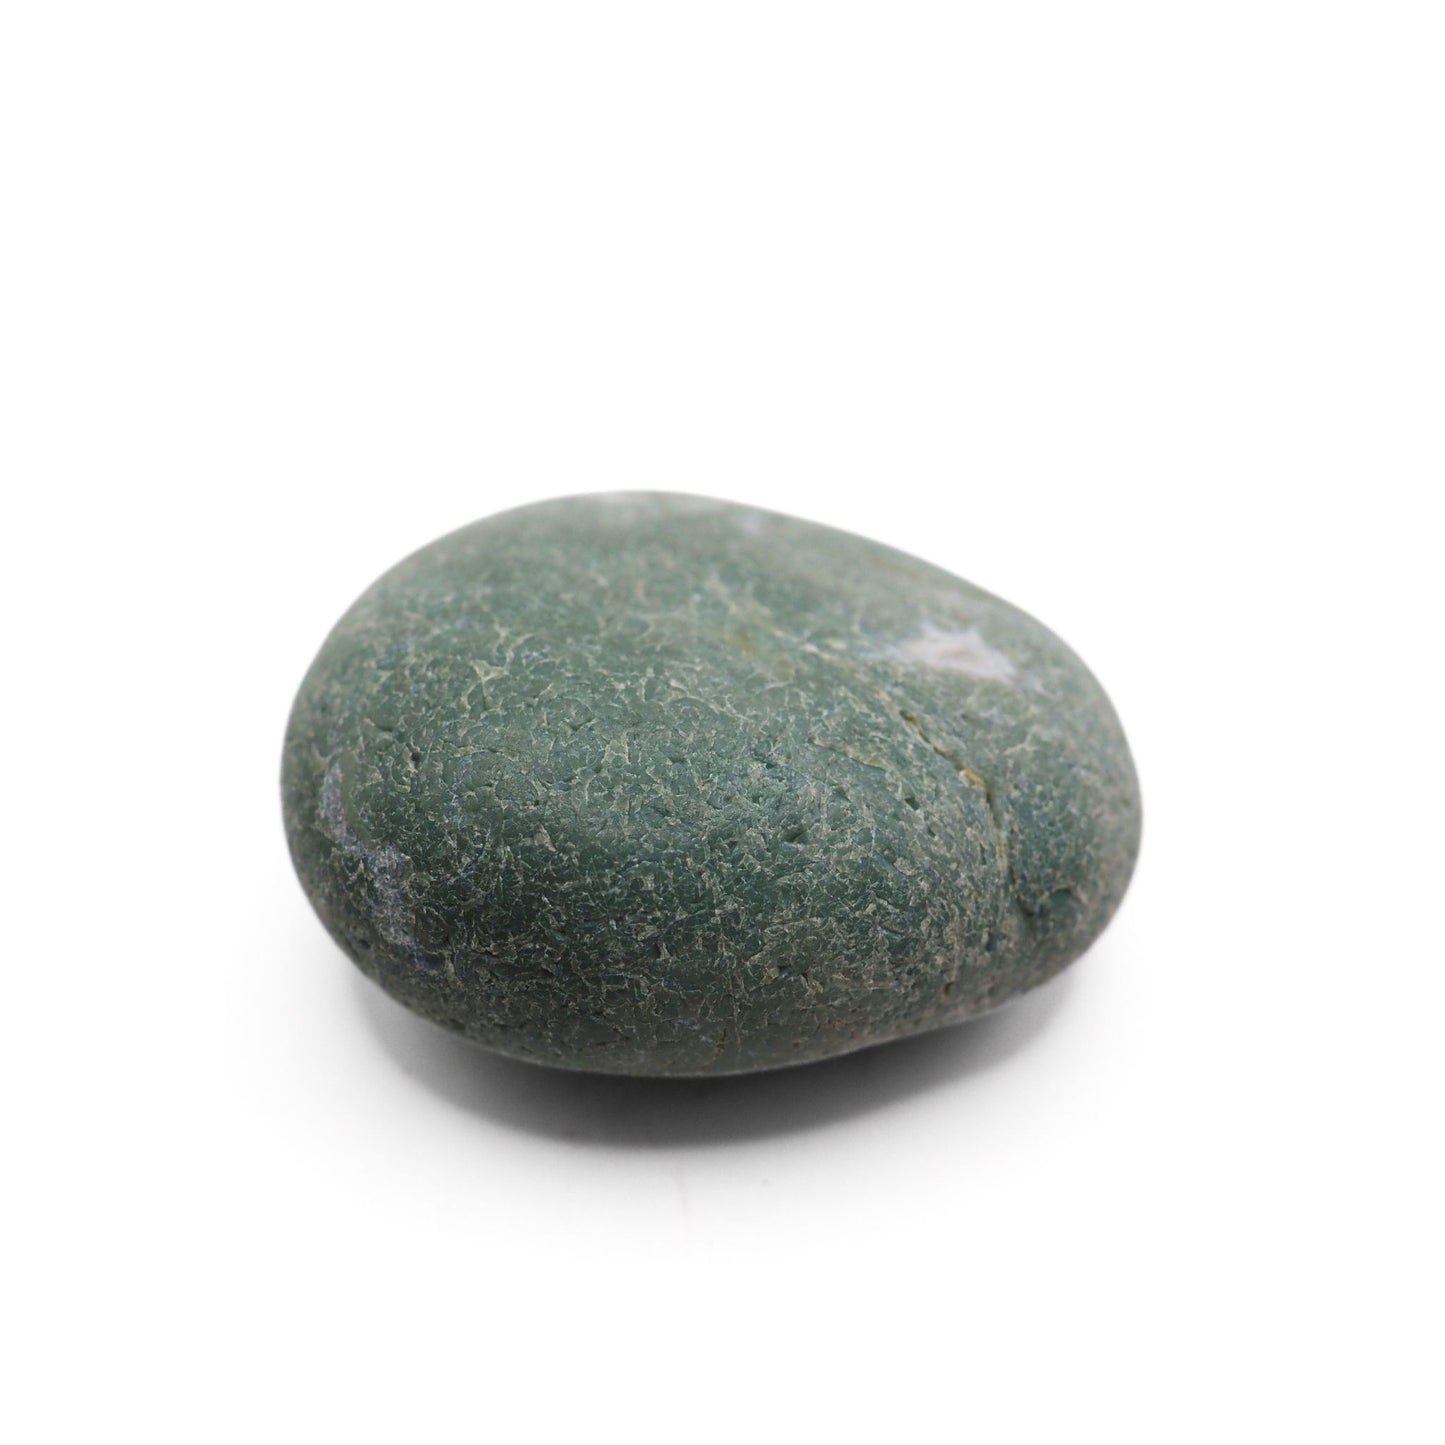 Sideview of green Jasper palm stone